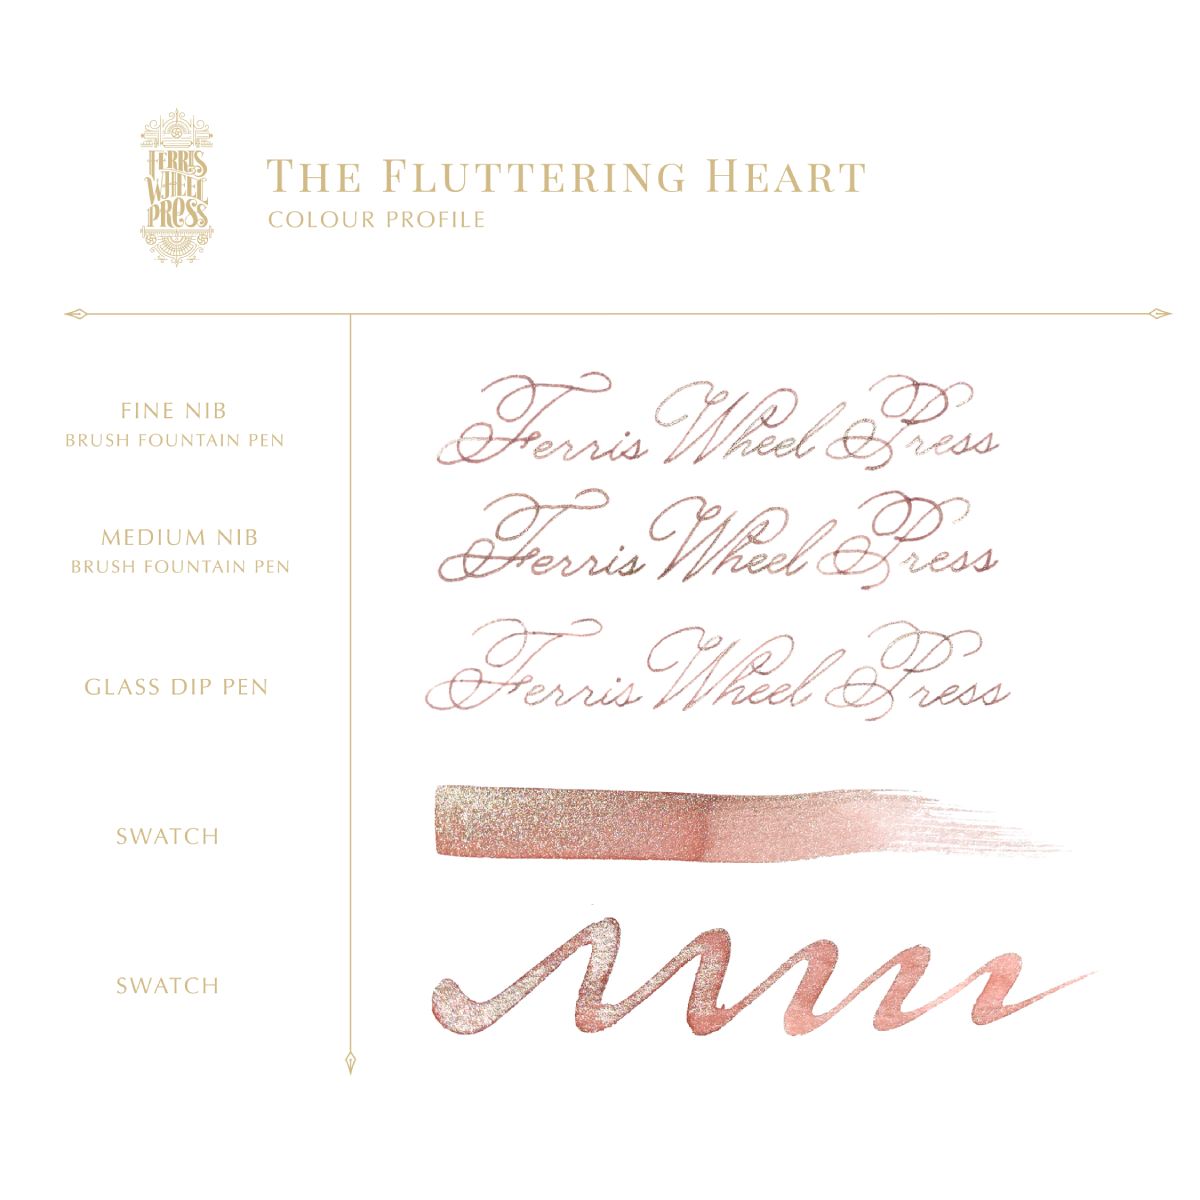 Ferris Wheel Press - limited edition 2023 The Fluttering Heart, 38 ml